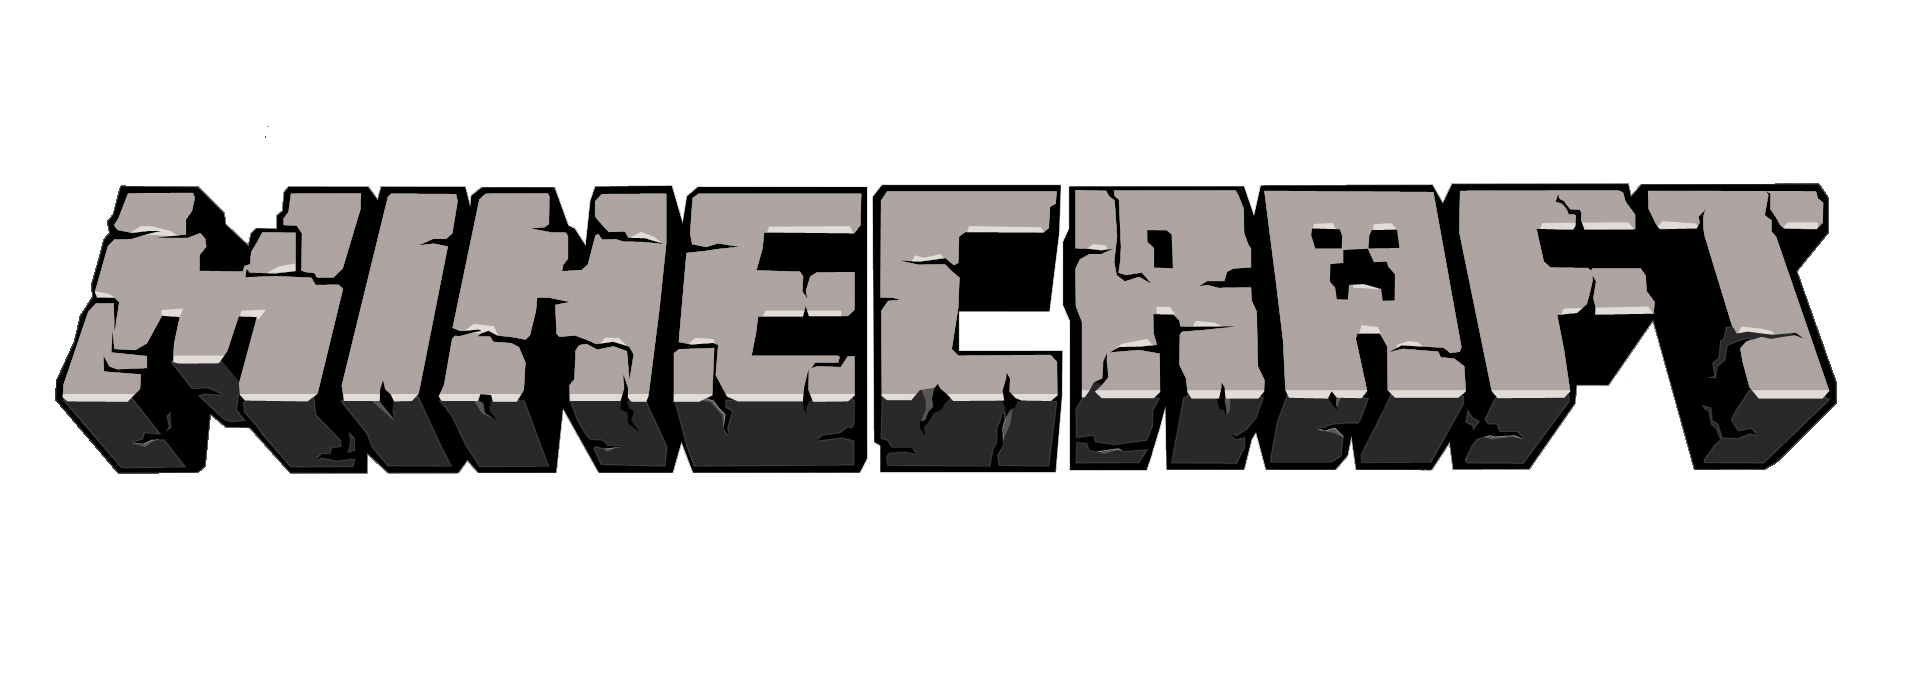 Minecraft-logo-transparent-background-ut05tirq.png